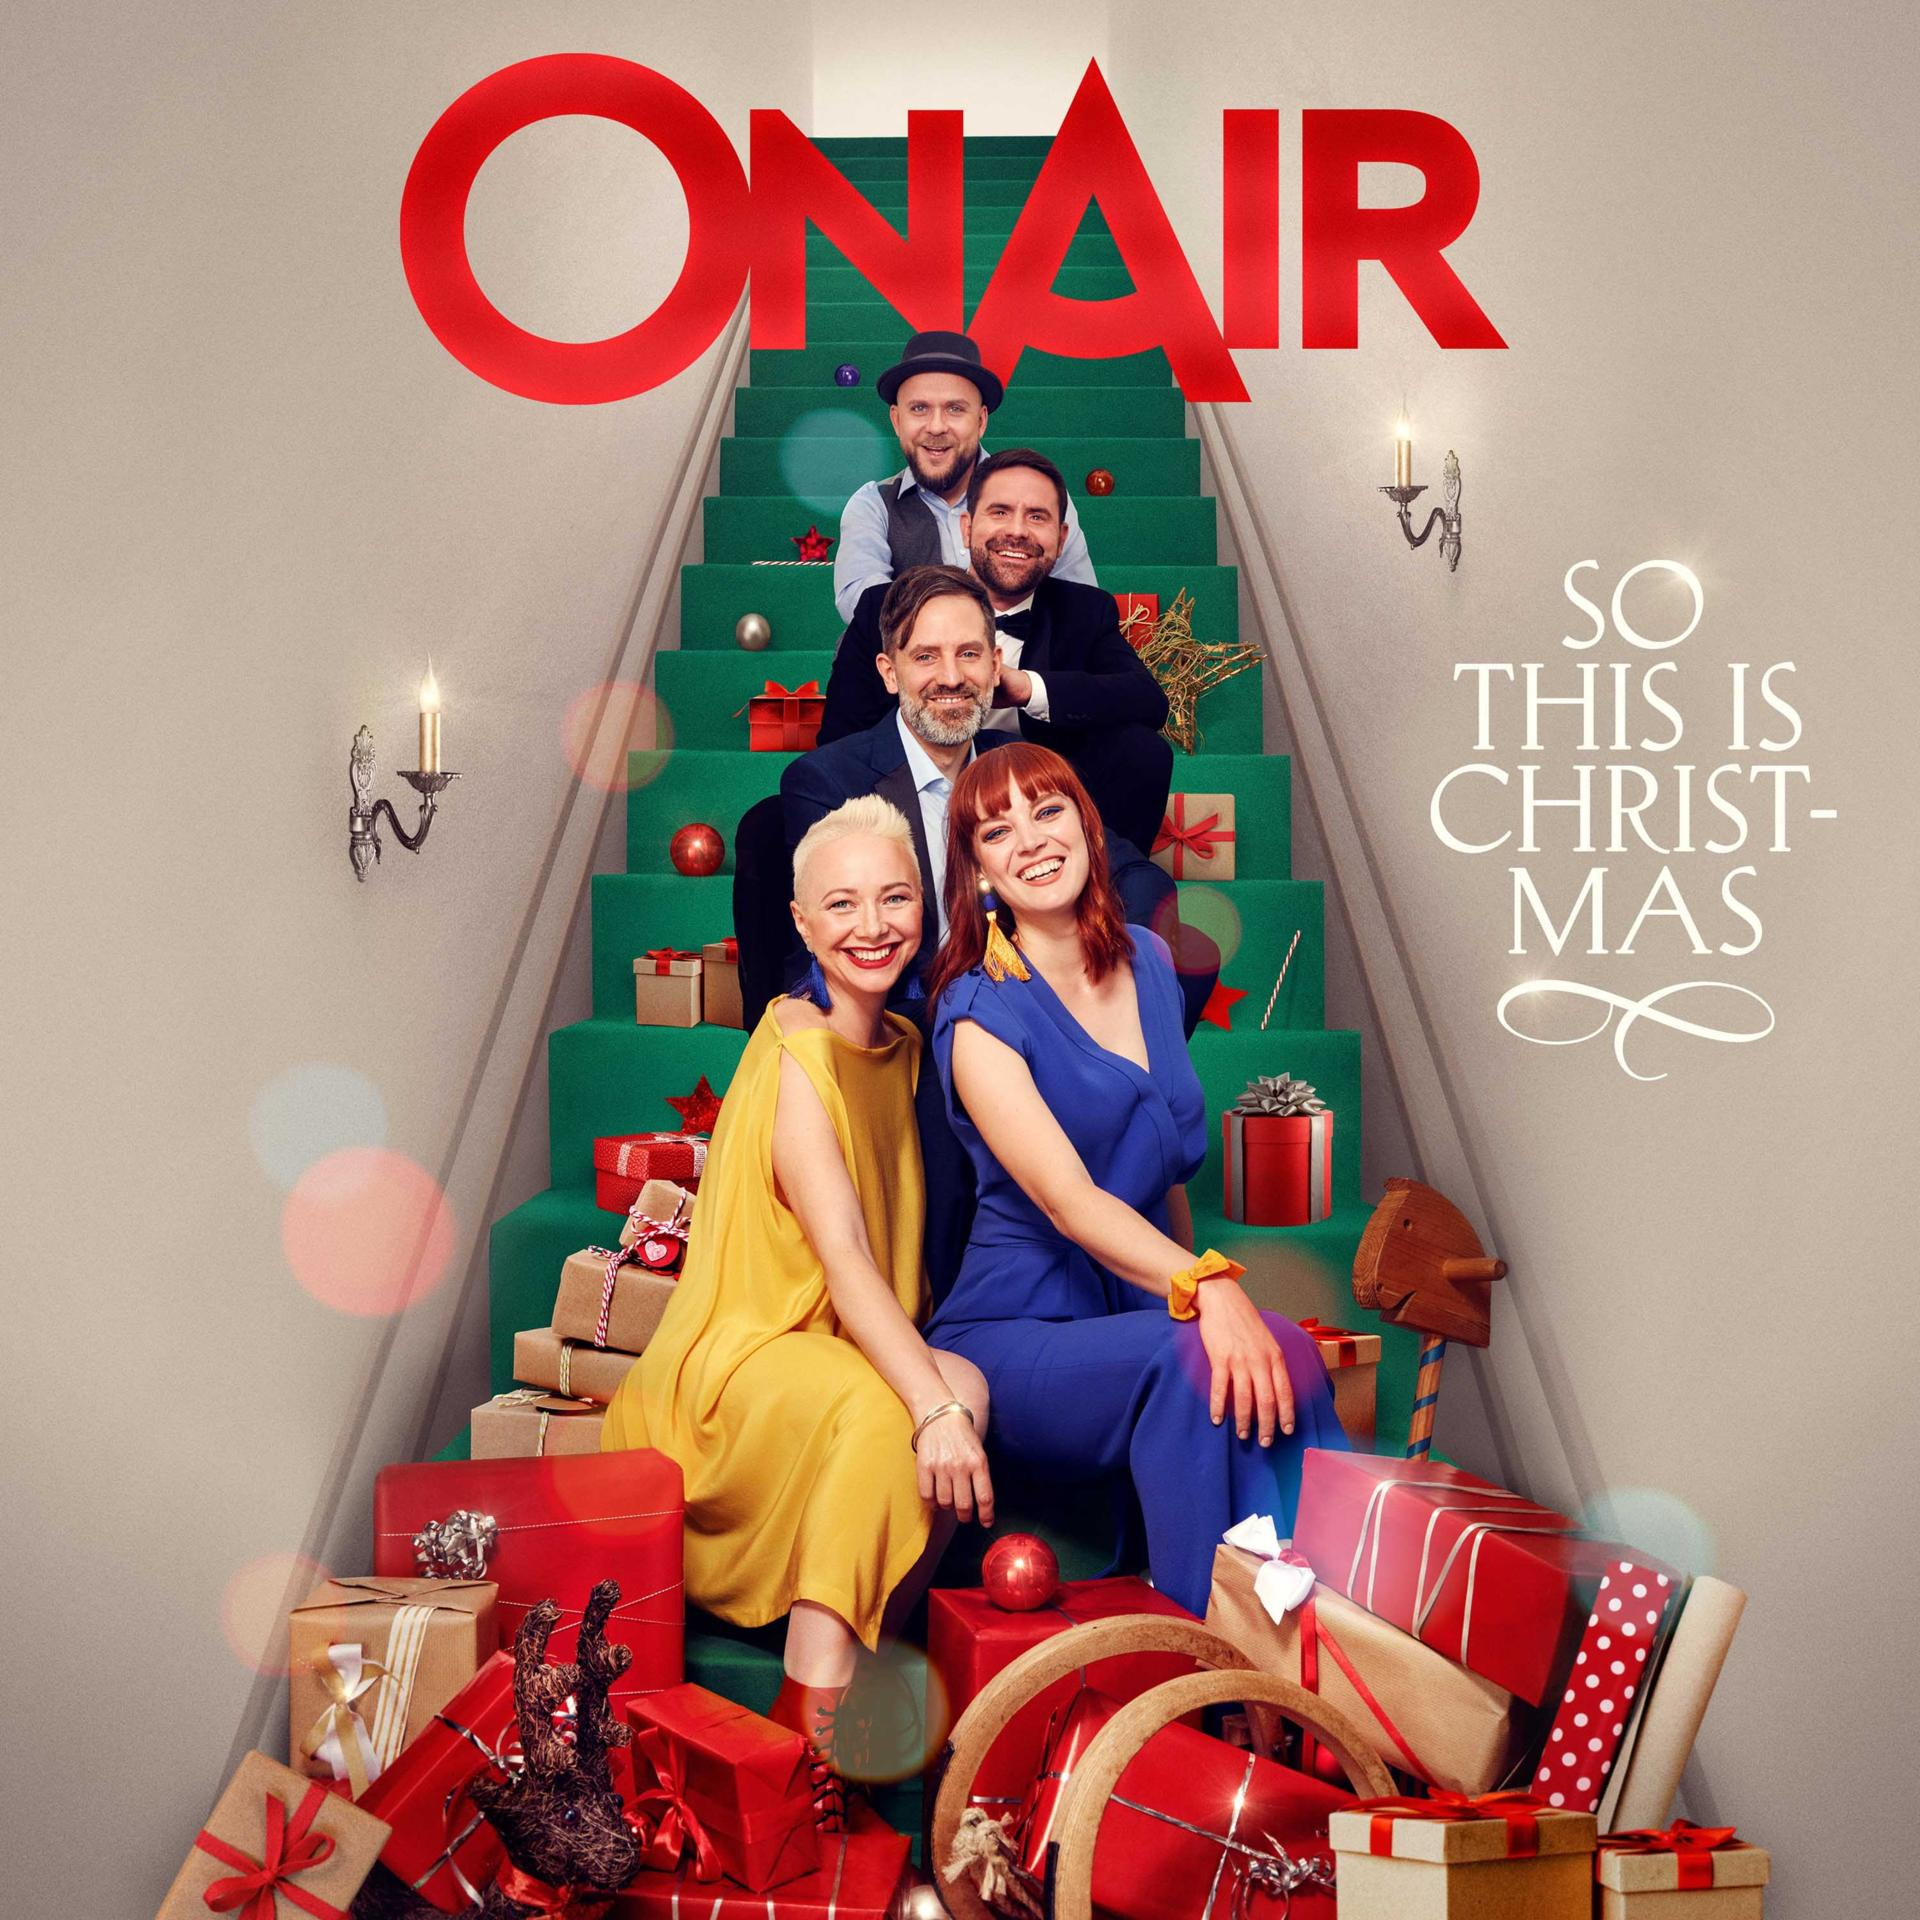 Christmas This - So (CD) - Is Onair